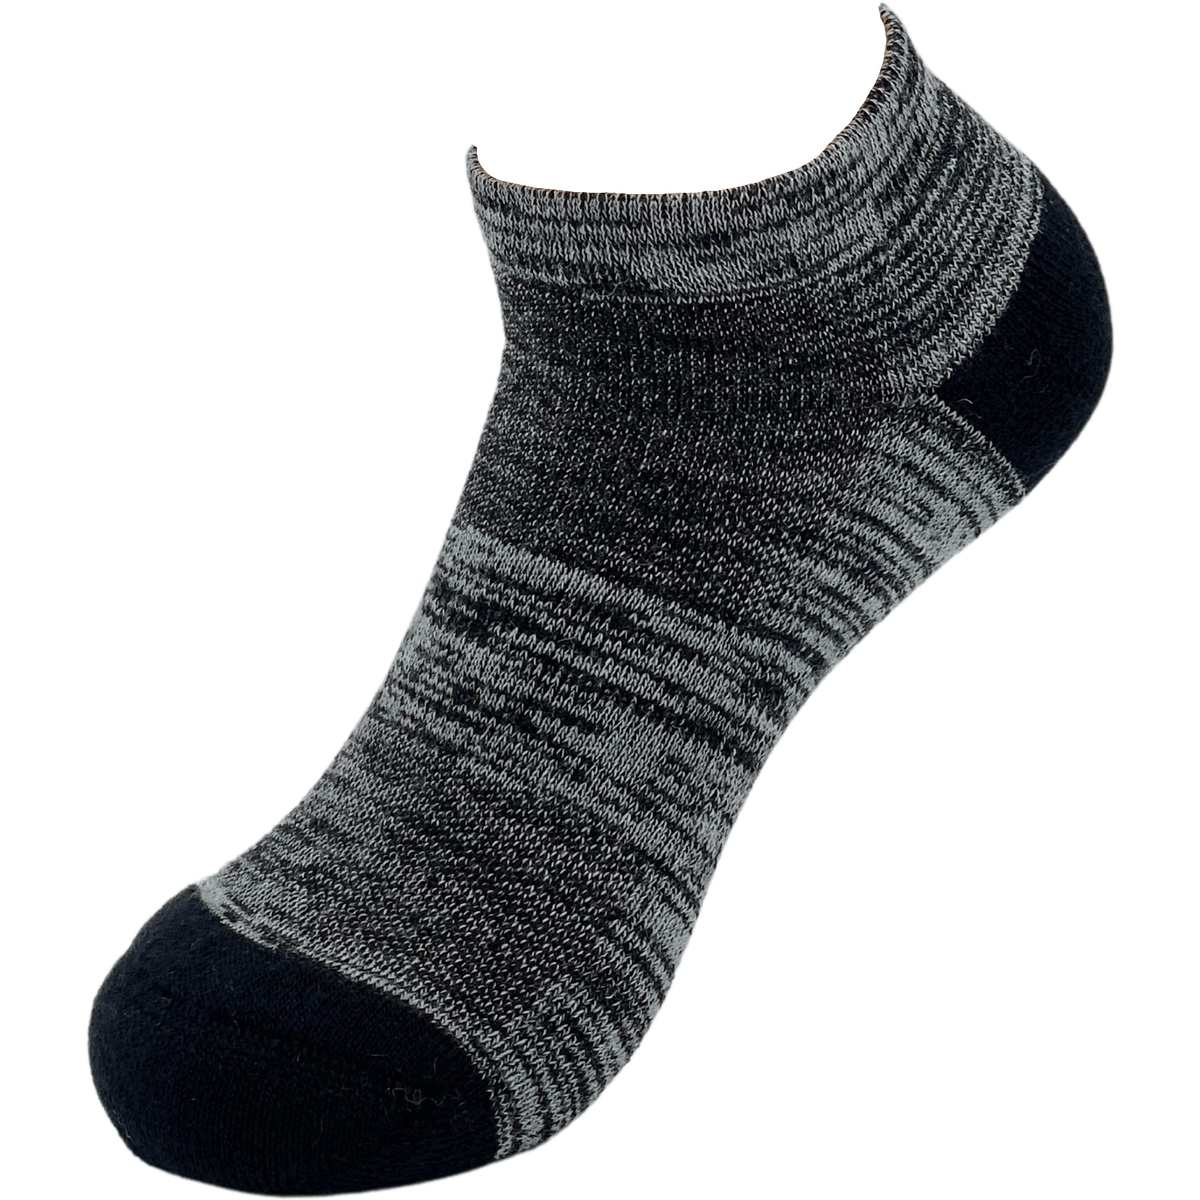 Natural Feelings Men’s Low-Cut Socks Low Ankle Socks for Men Pack